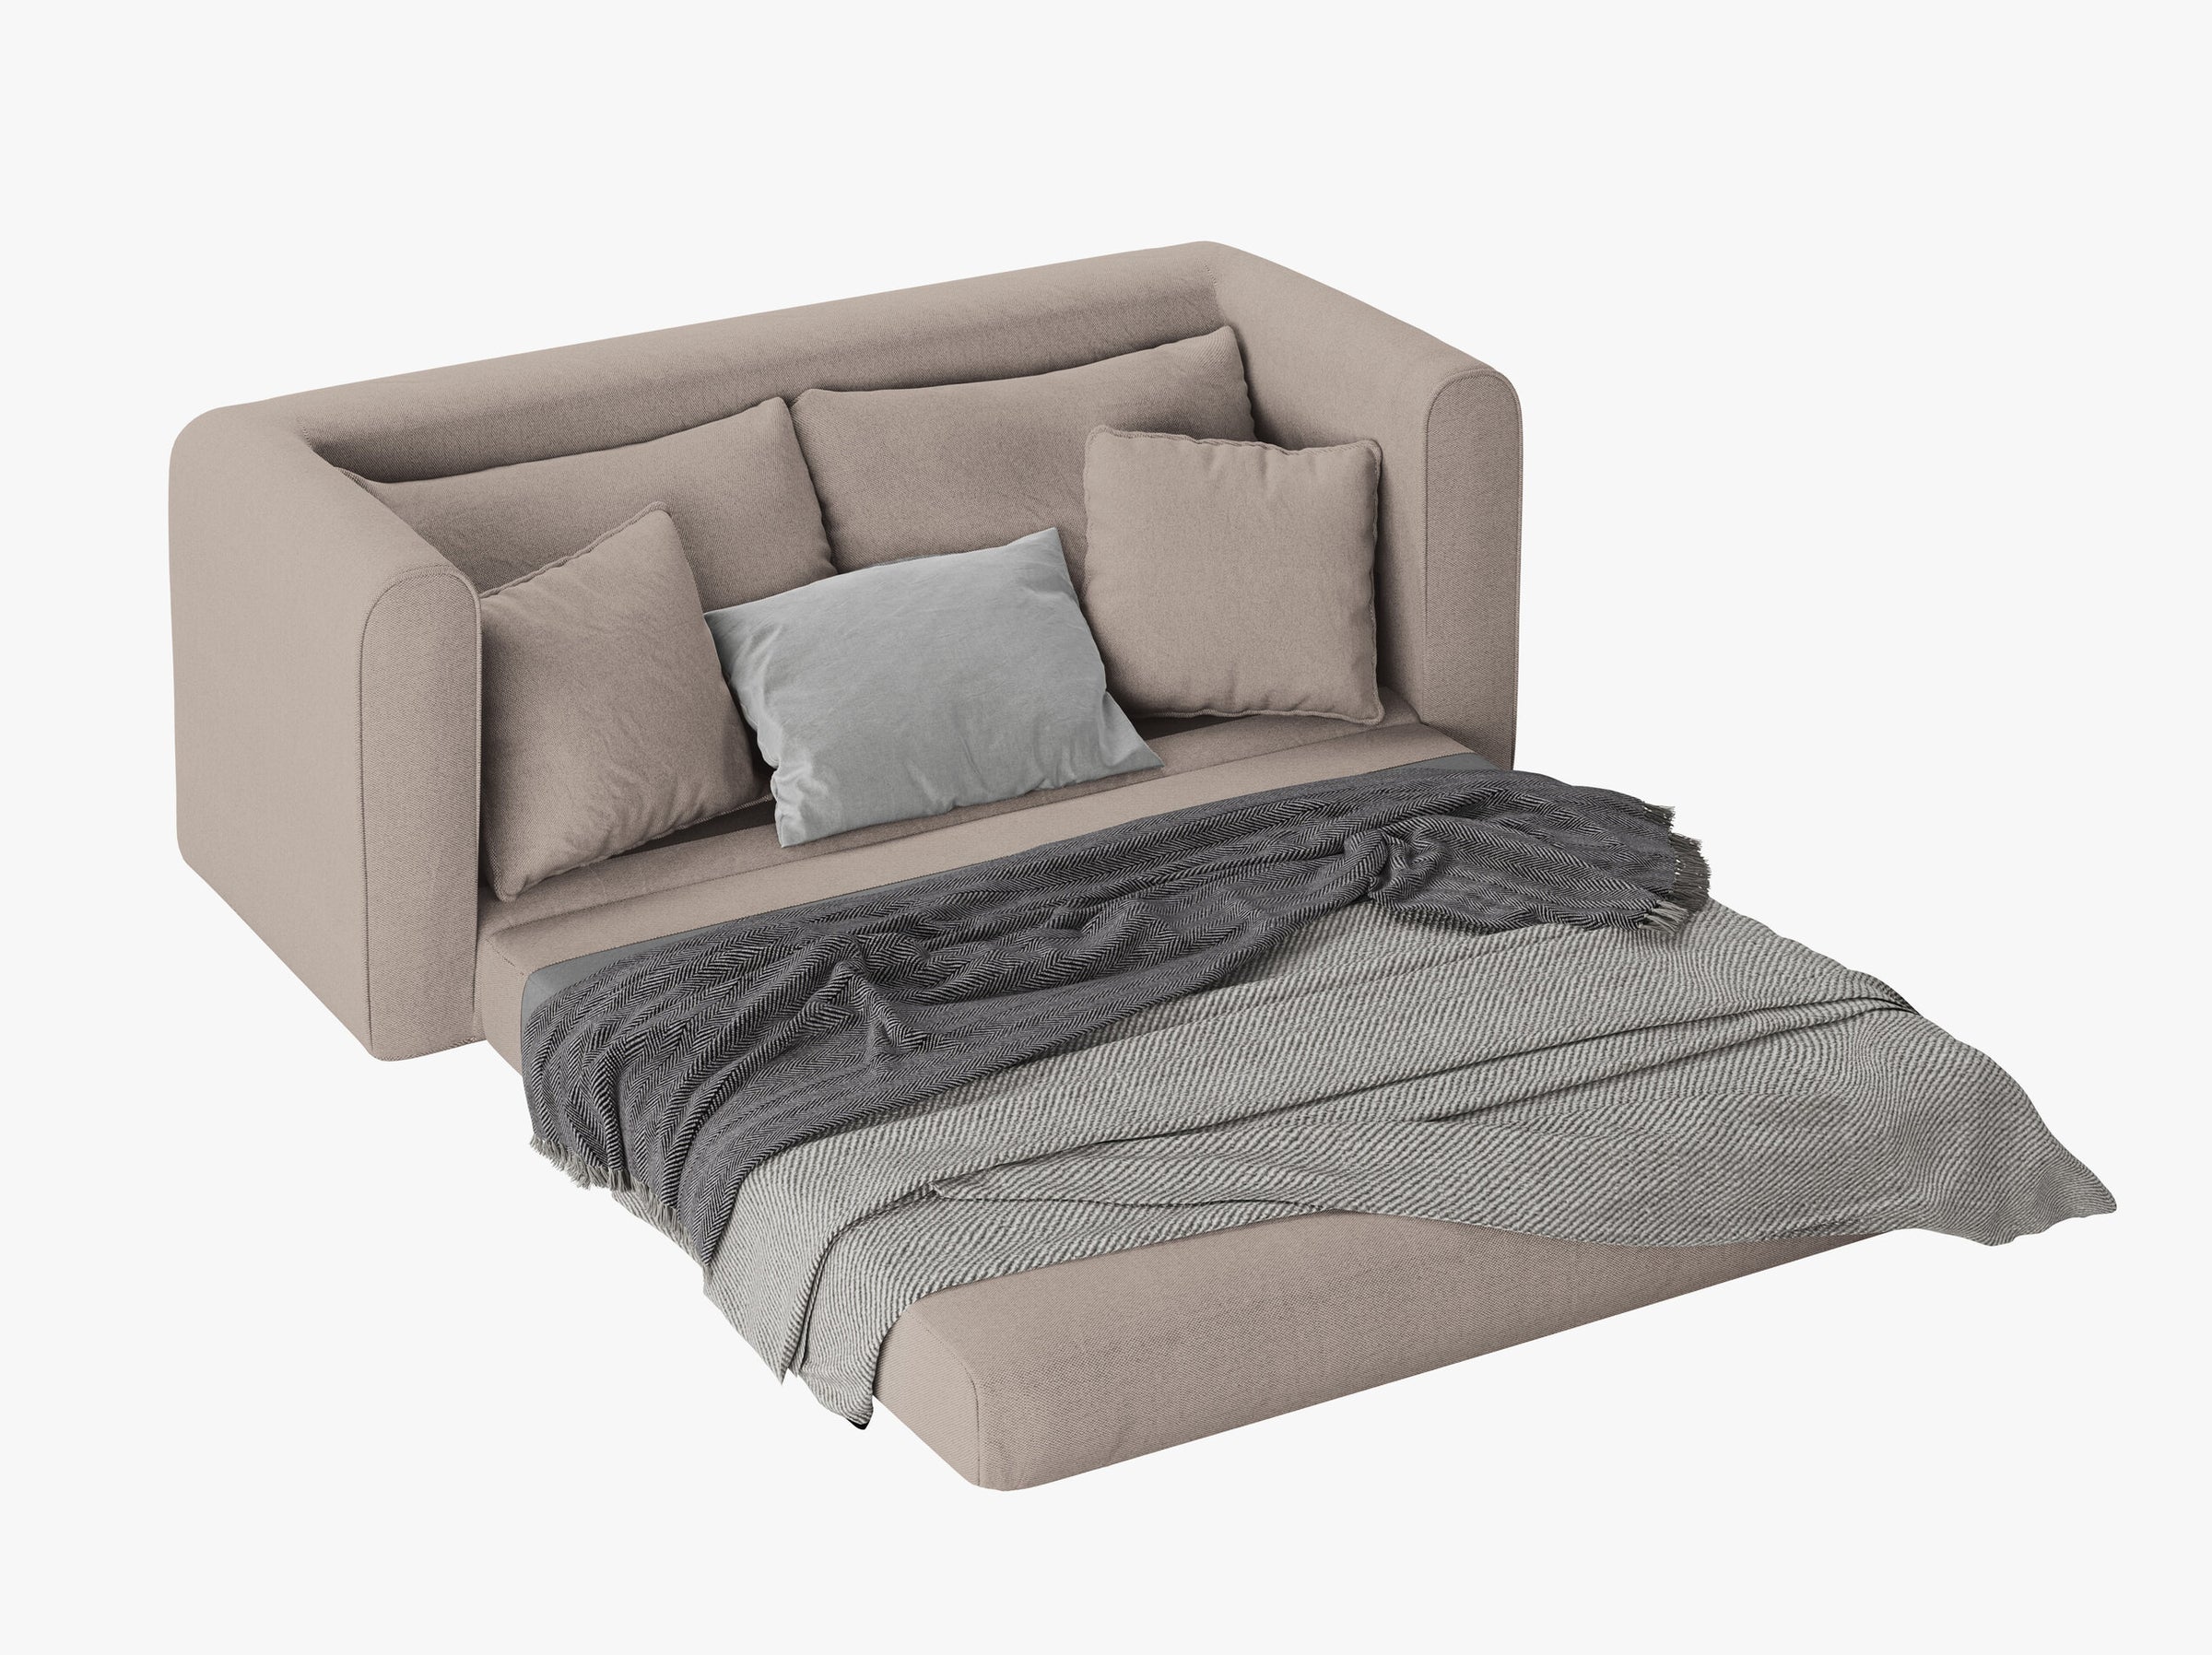 Lido sofas structured fabric beige